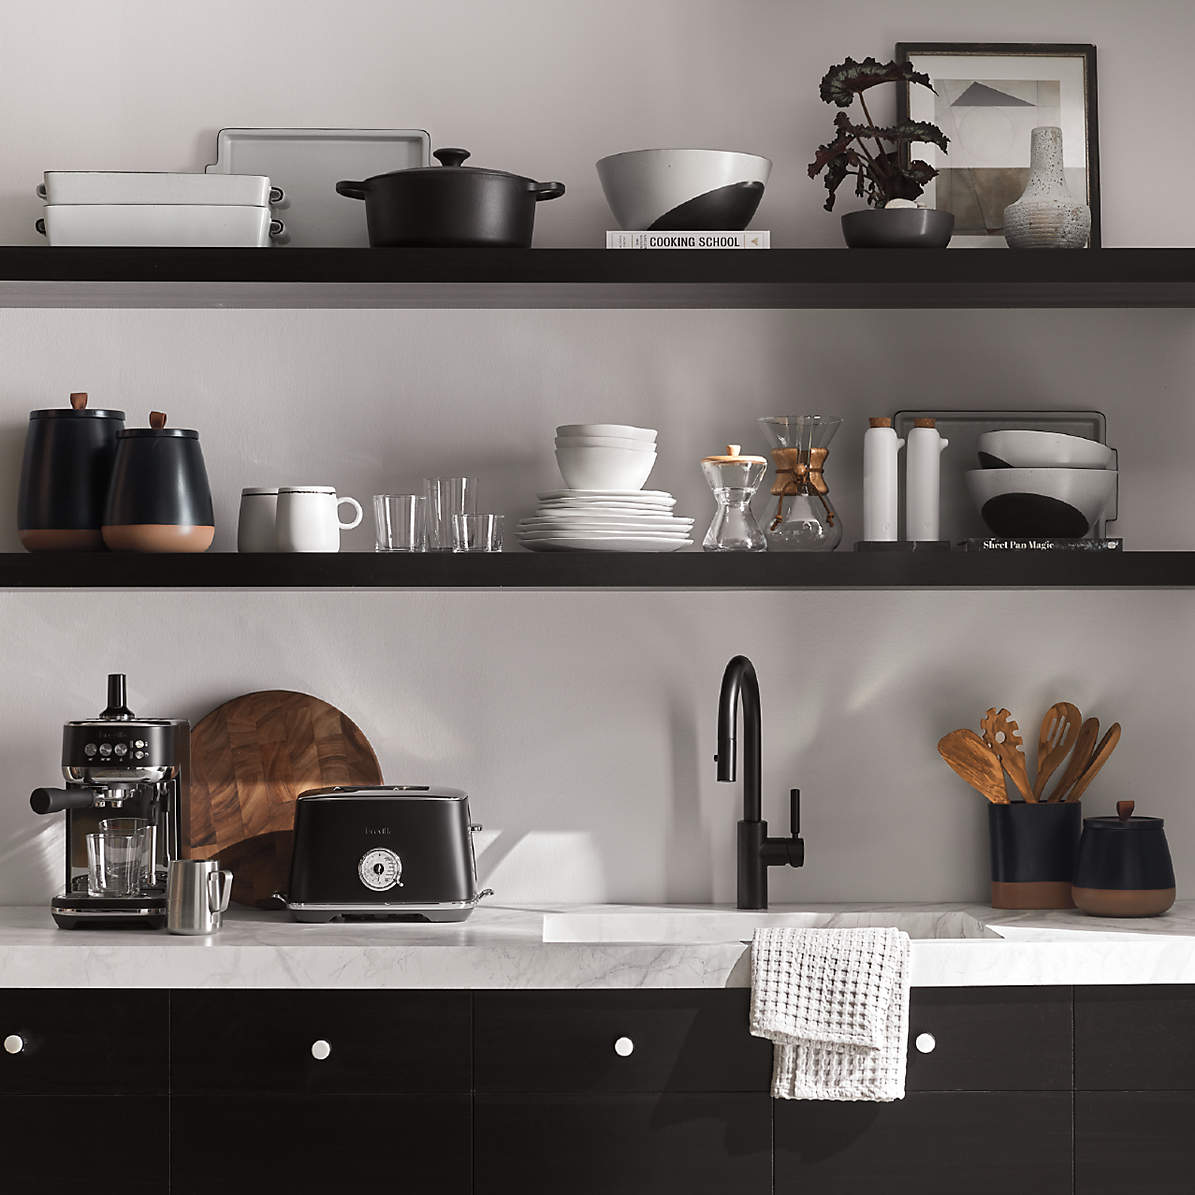 MyGift Modern Matte Black Ceramic Kitchen Countertop Utensil Holder Cooking Tools Storage Canister with Decorative White Utensils Design